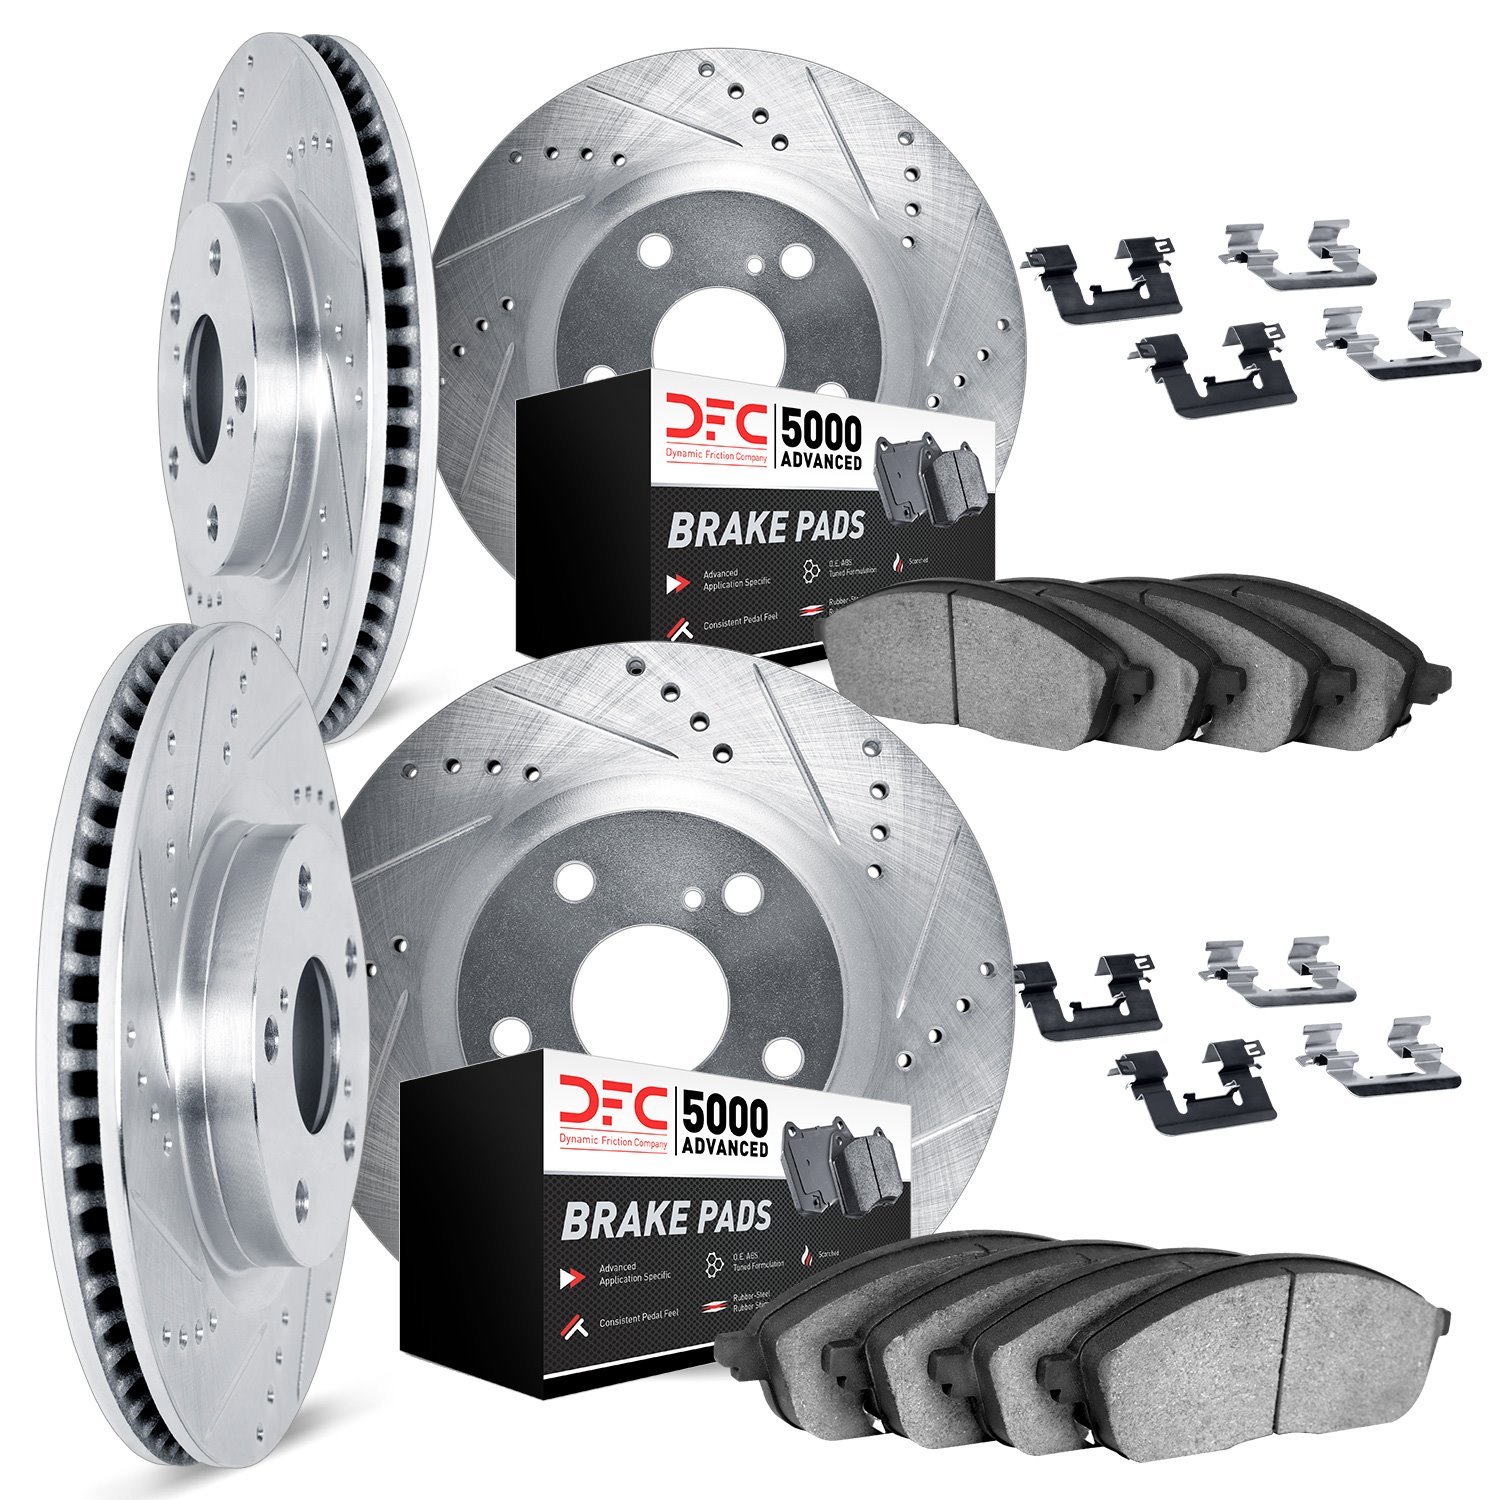 7514-67119 Drilled/Slotted Brake Rotors w/5000 Advanced Brake Pads Kit & Hardware [Silver], 2011-2013 Infiniti/Nissan, Position: